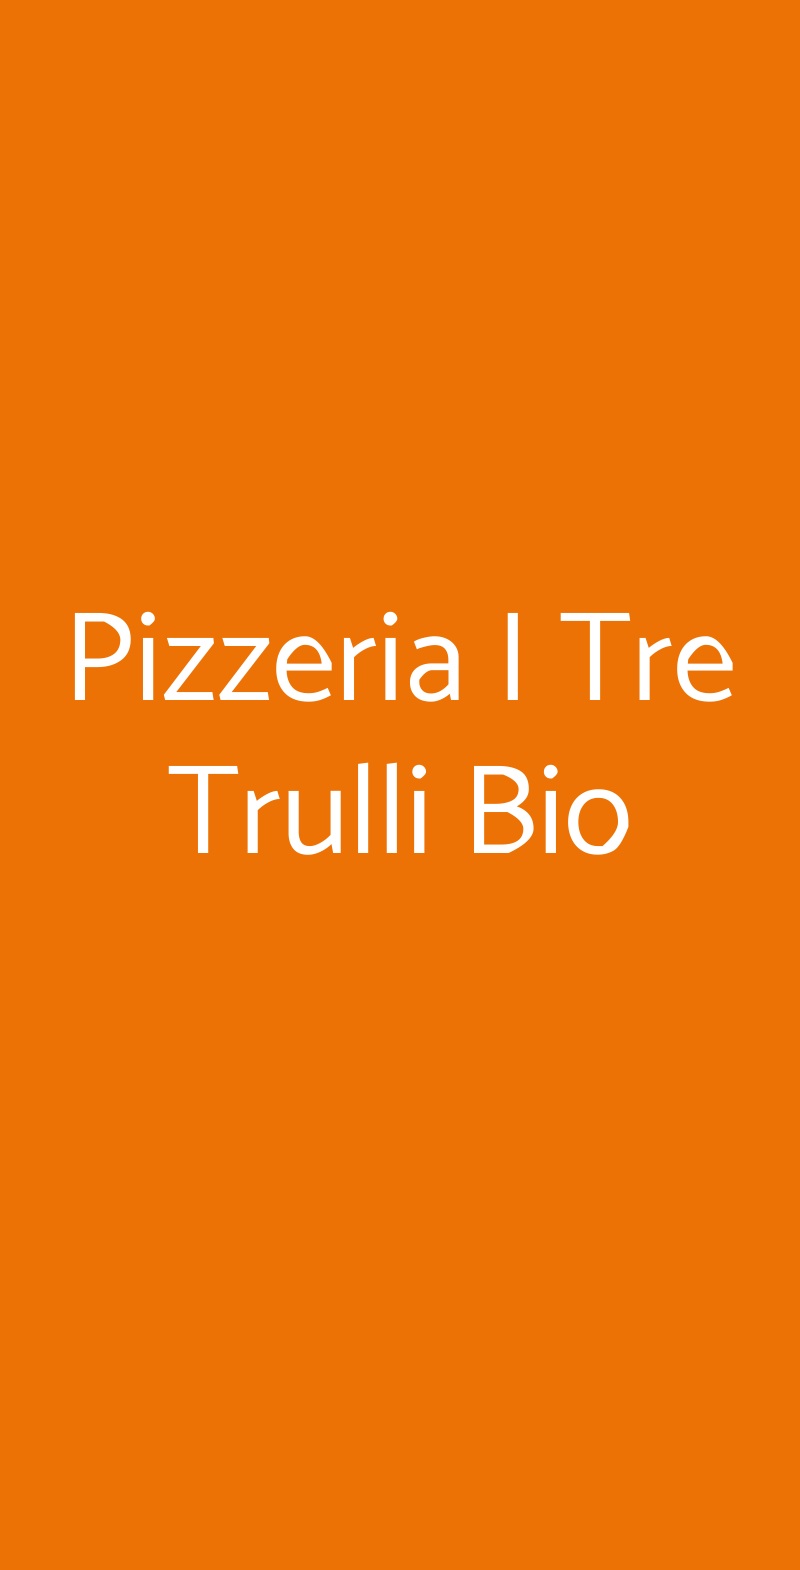 Pizzeria I Tre Trulli Bio Bologna menù 1 pagina